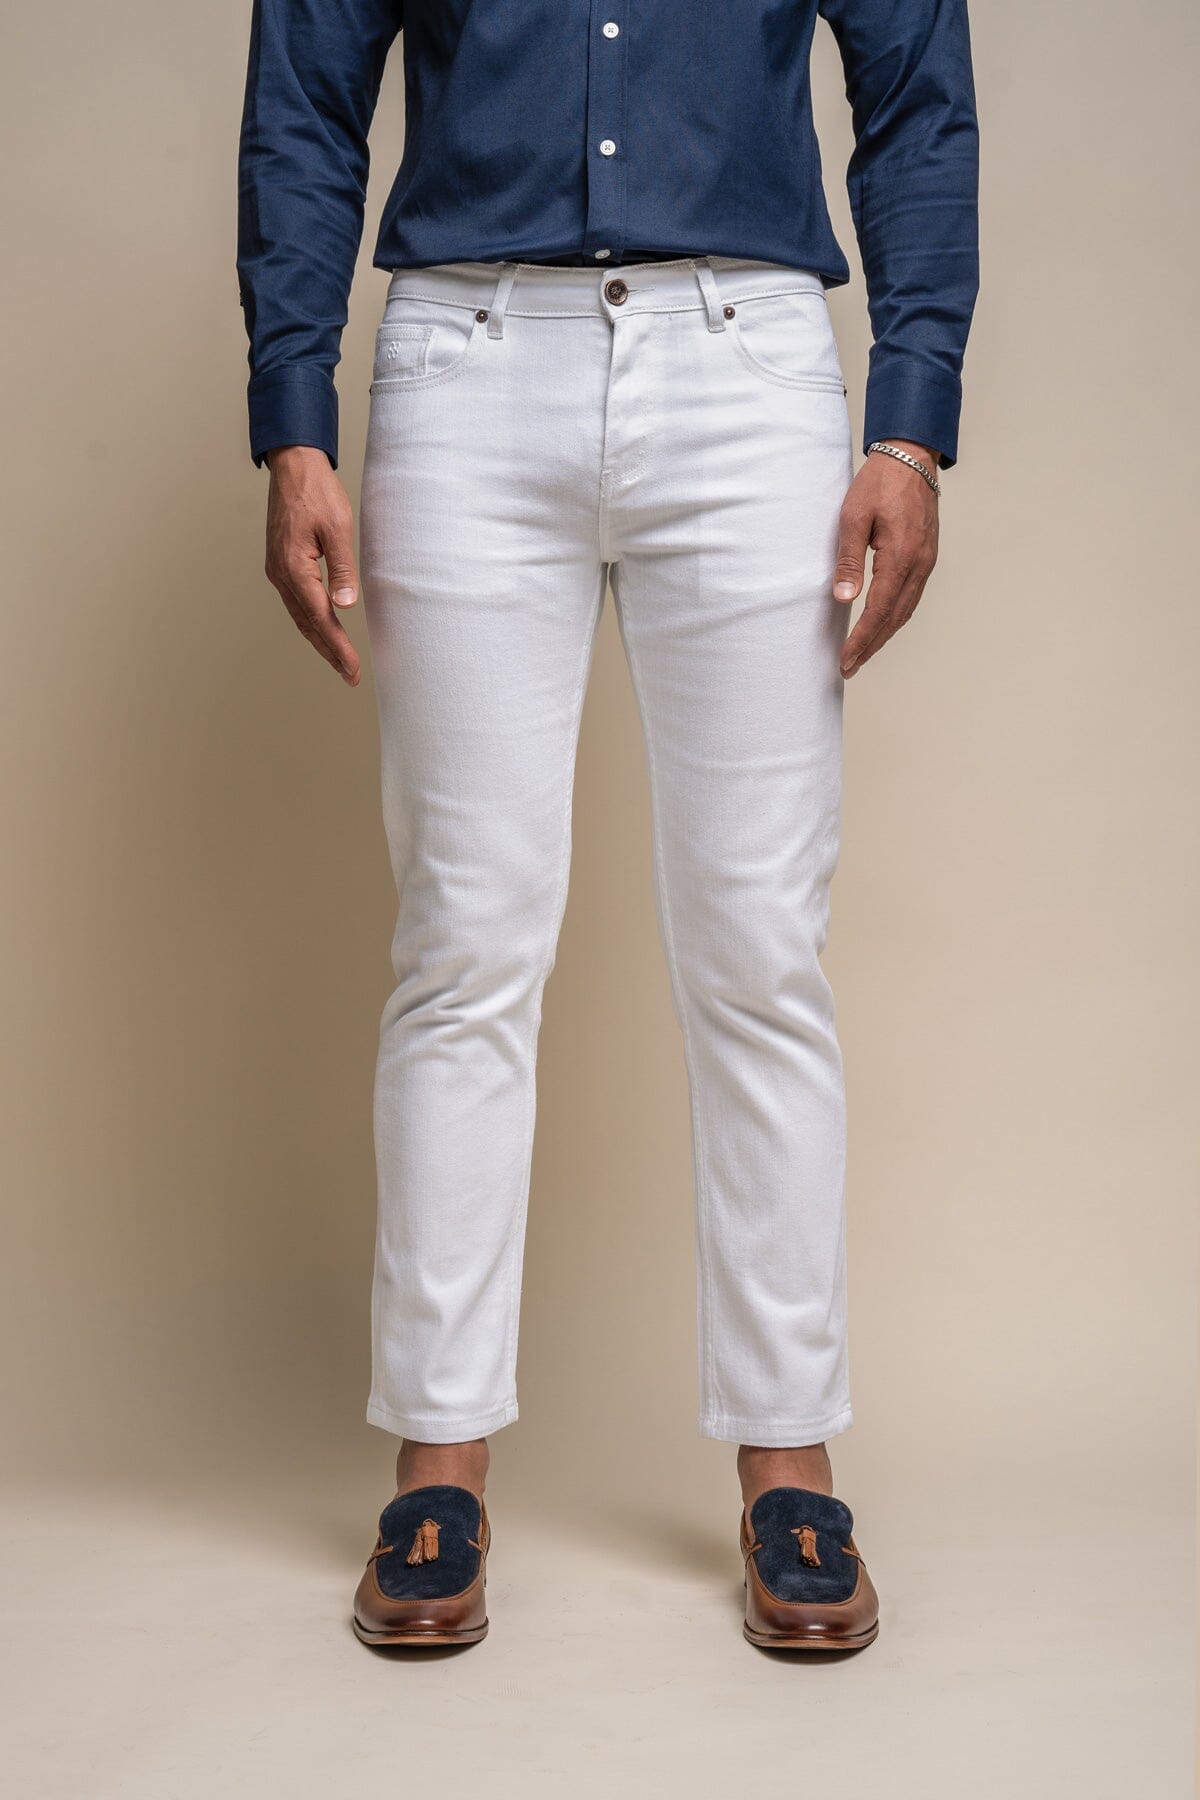 Milano White Stretch Denim Jeans - Jeans - 30R 